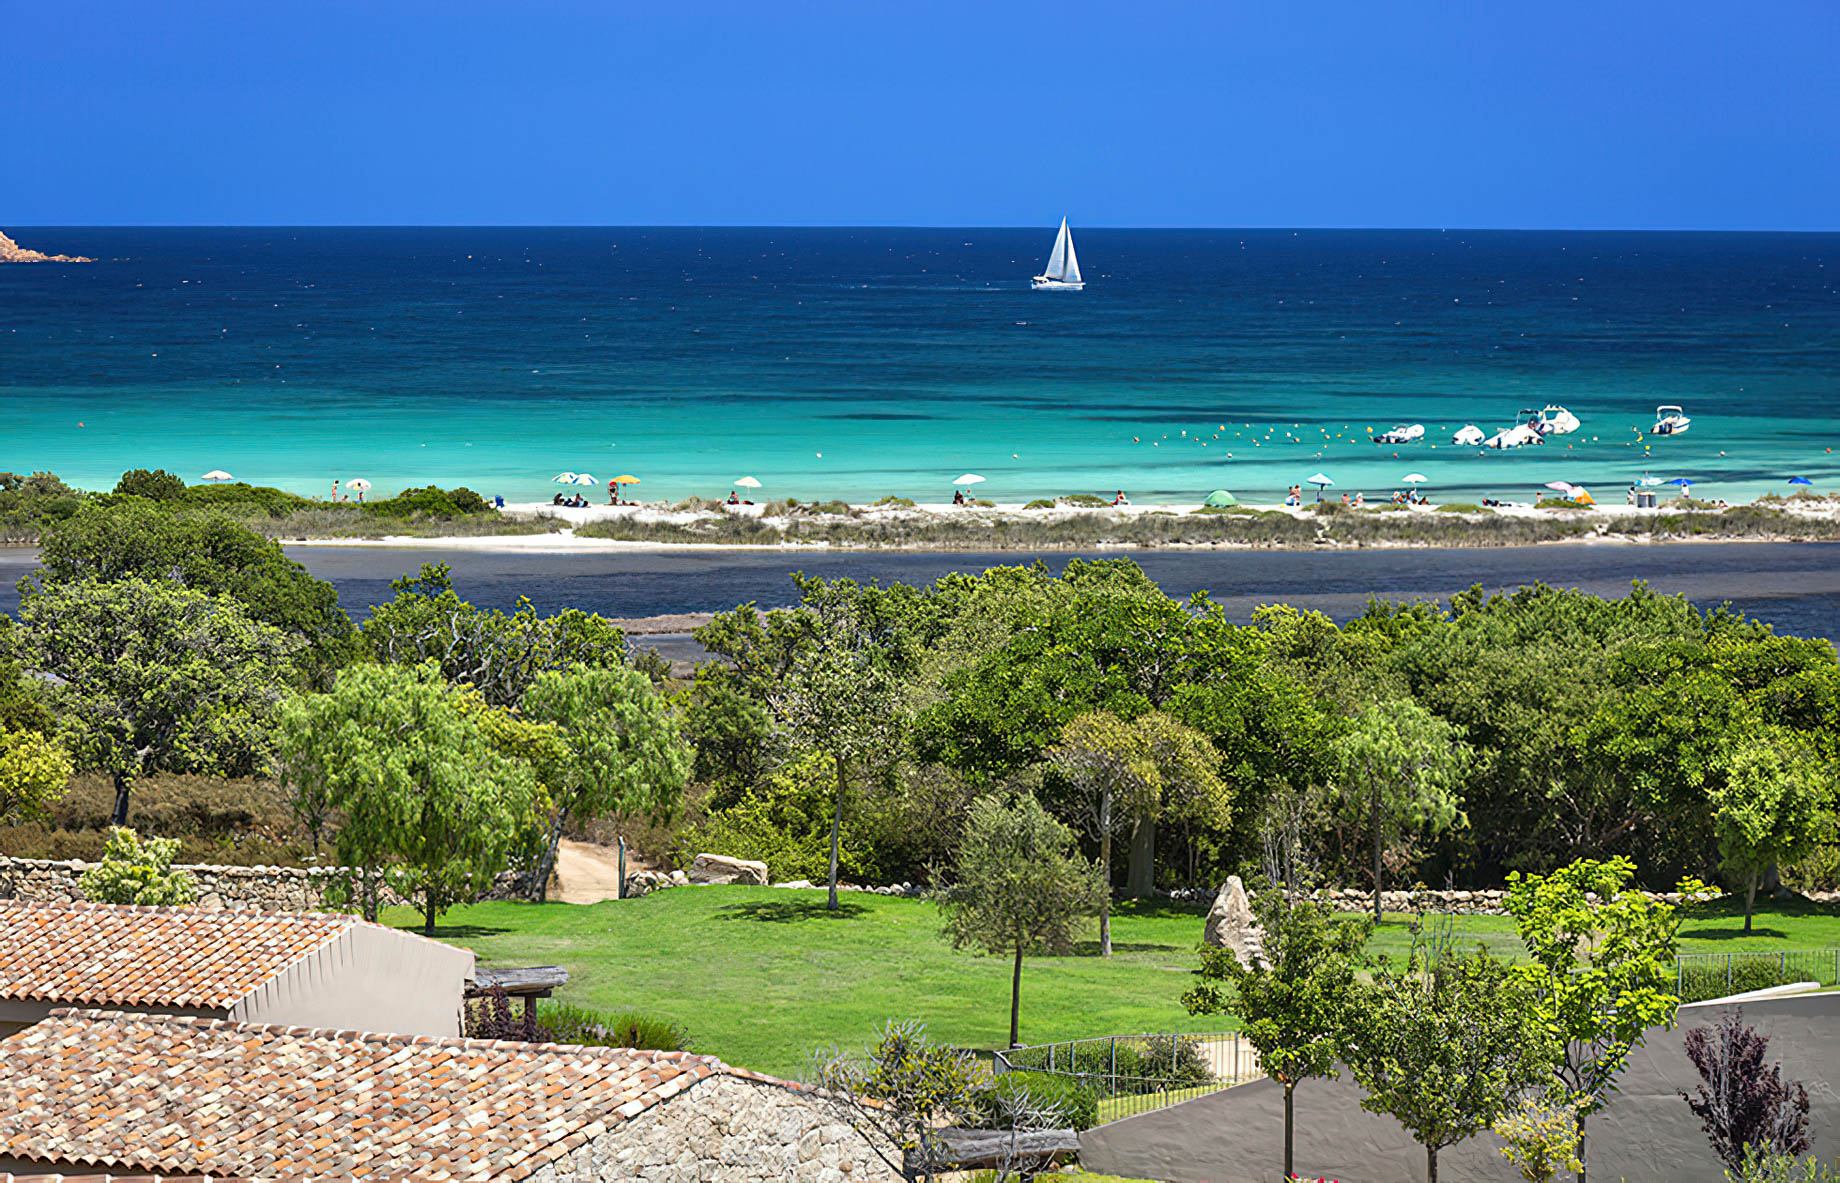 Baglioni Resort Sardinia – San Teodoro, Sardegna, Italy – Resort Beach View